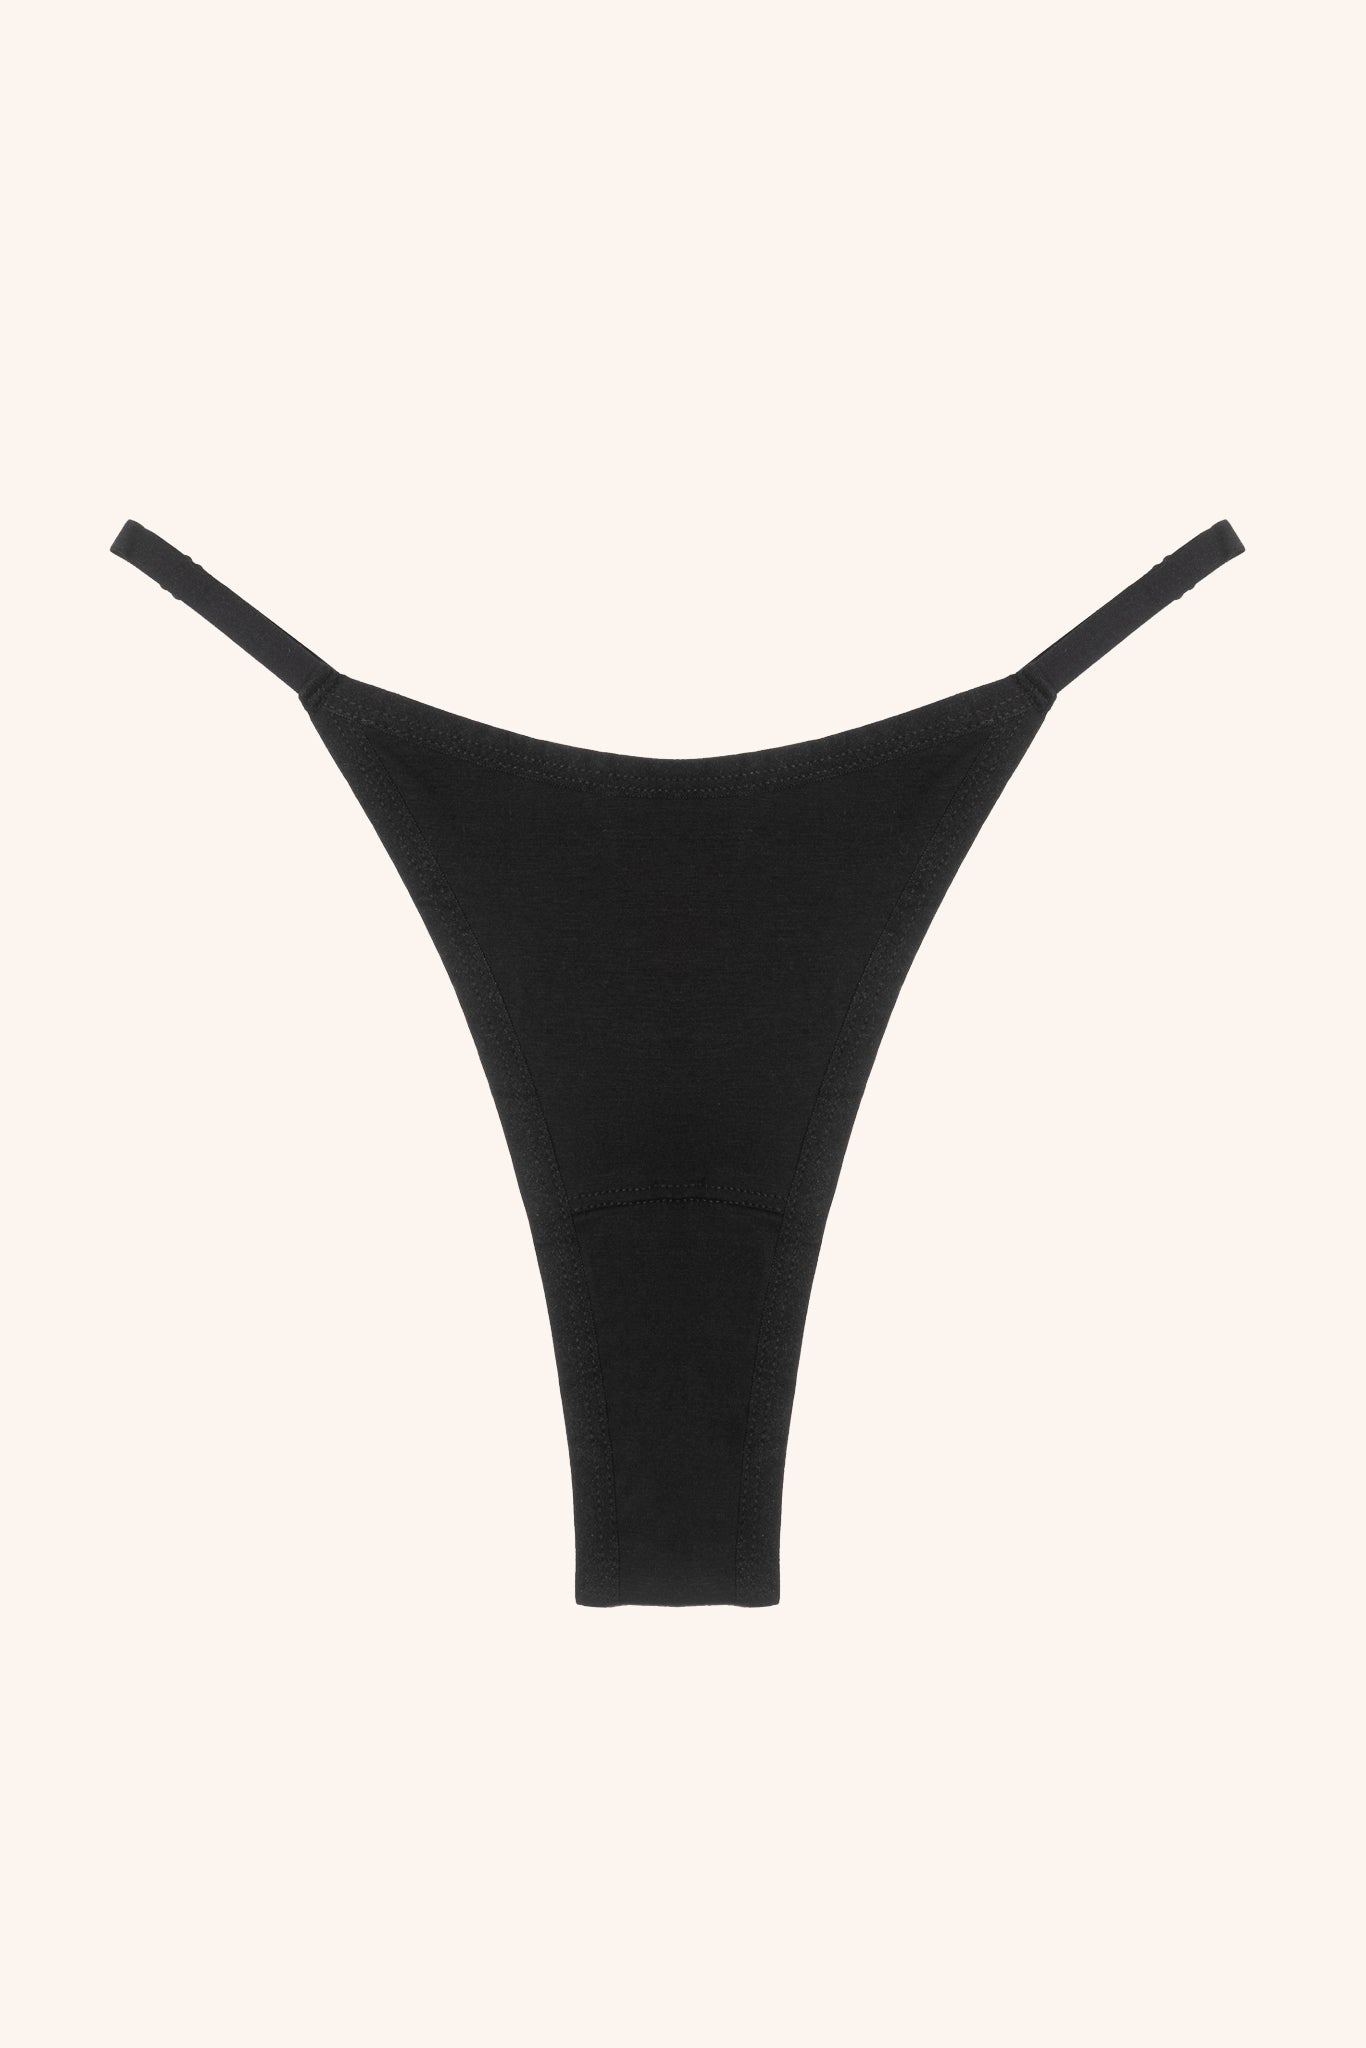 50% Off- Women Sexy High Cut G-string Thongs T-back Underwear Panties  Lingeries Sleepwear